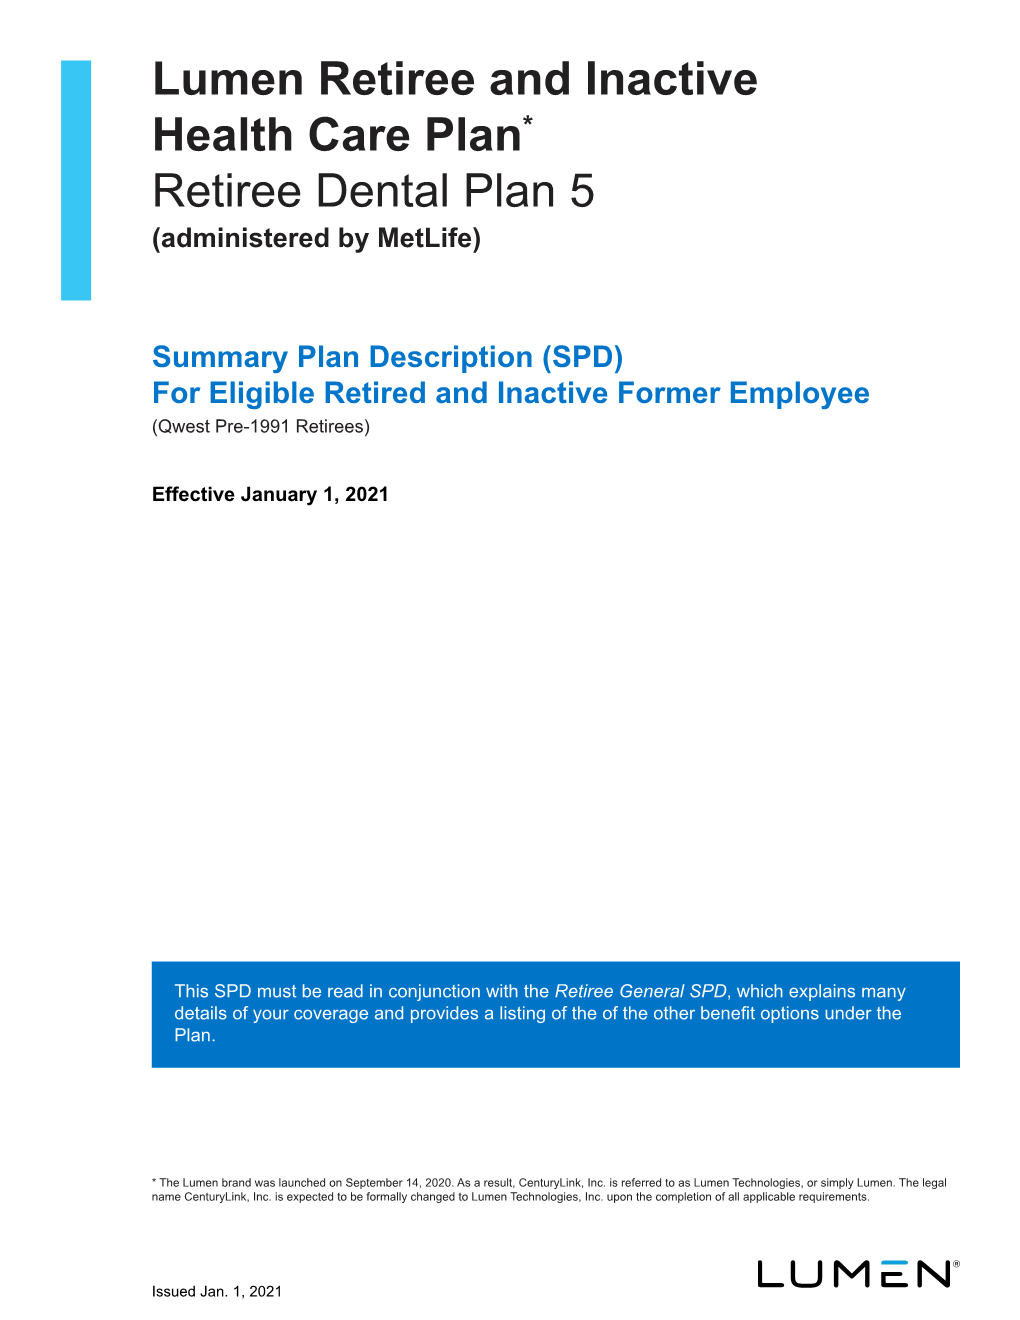 Lumen Retiree and Inactive Health Care Plan* Retiree Dental Plan 5